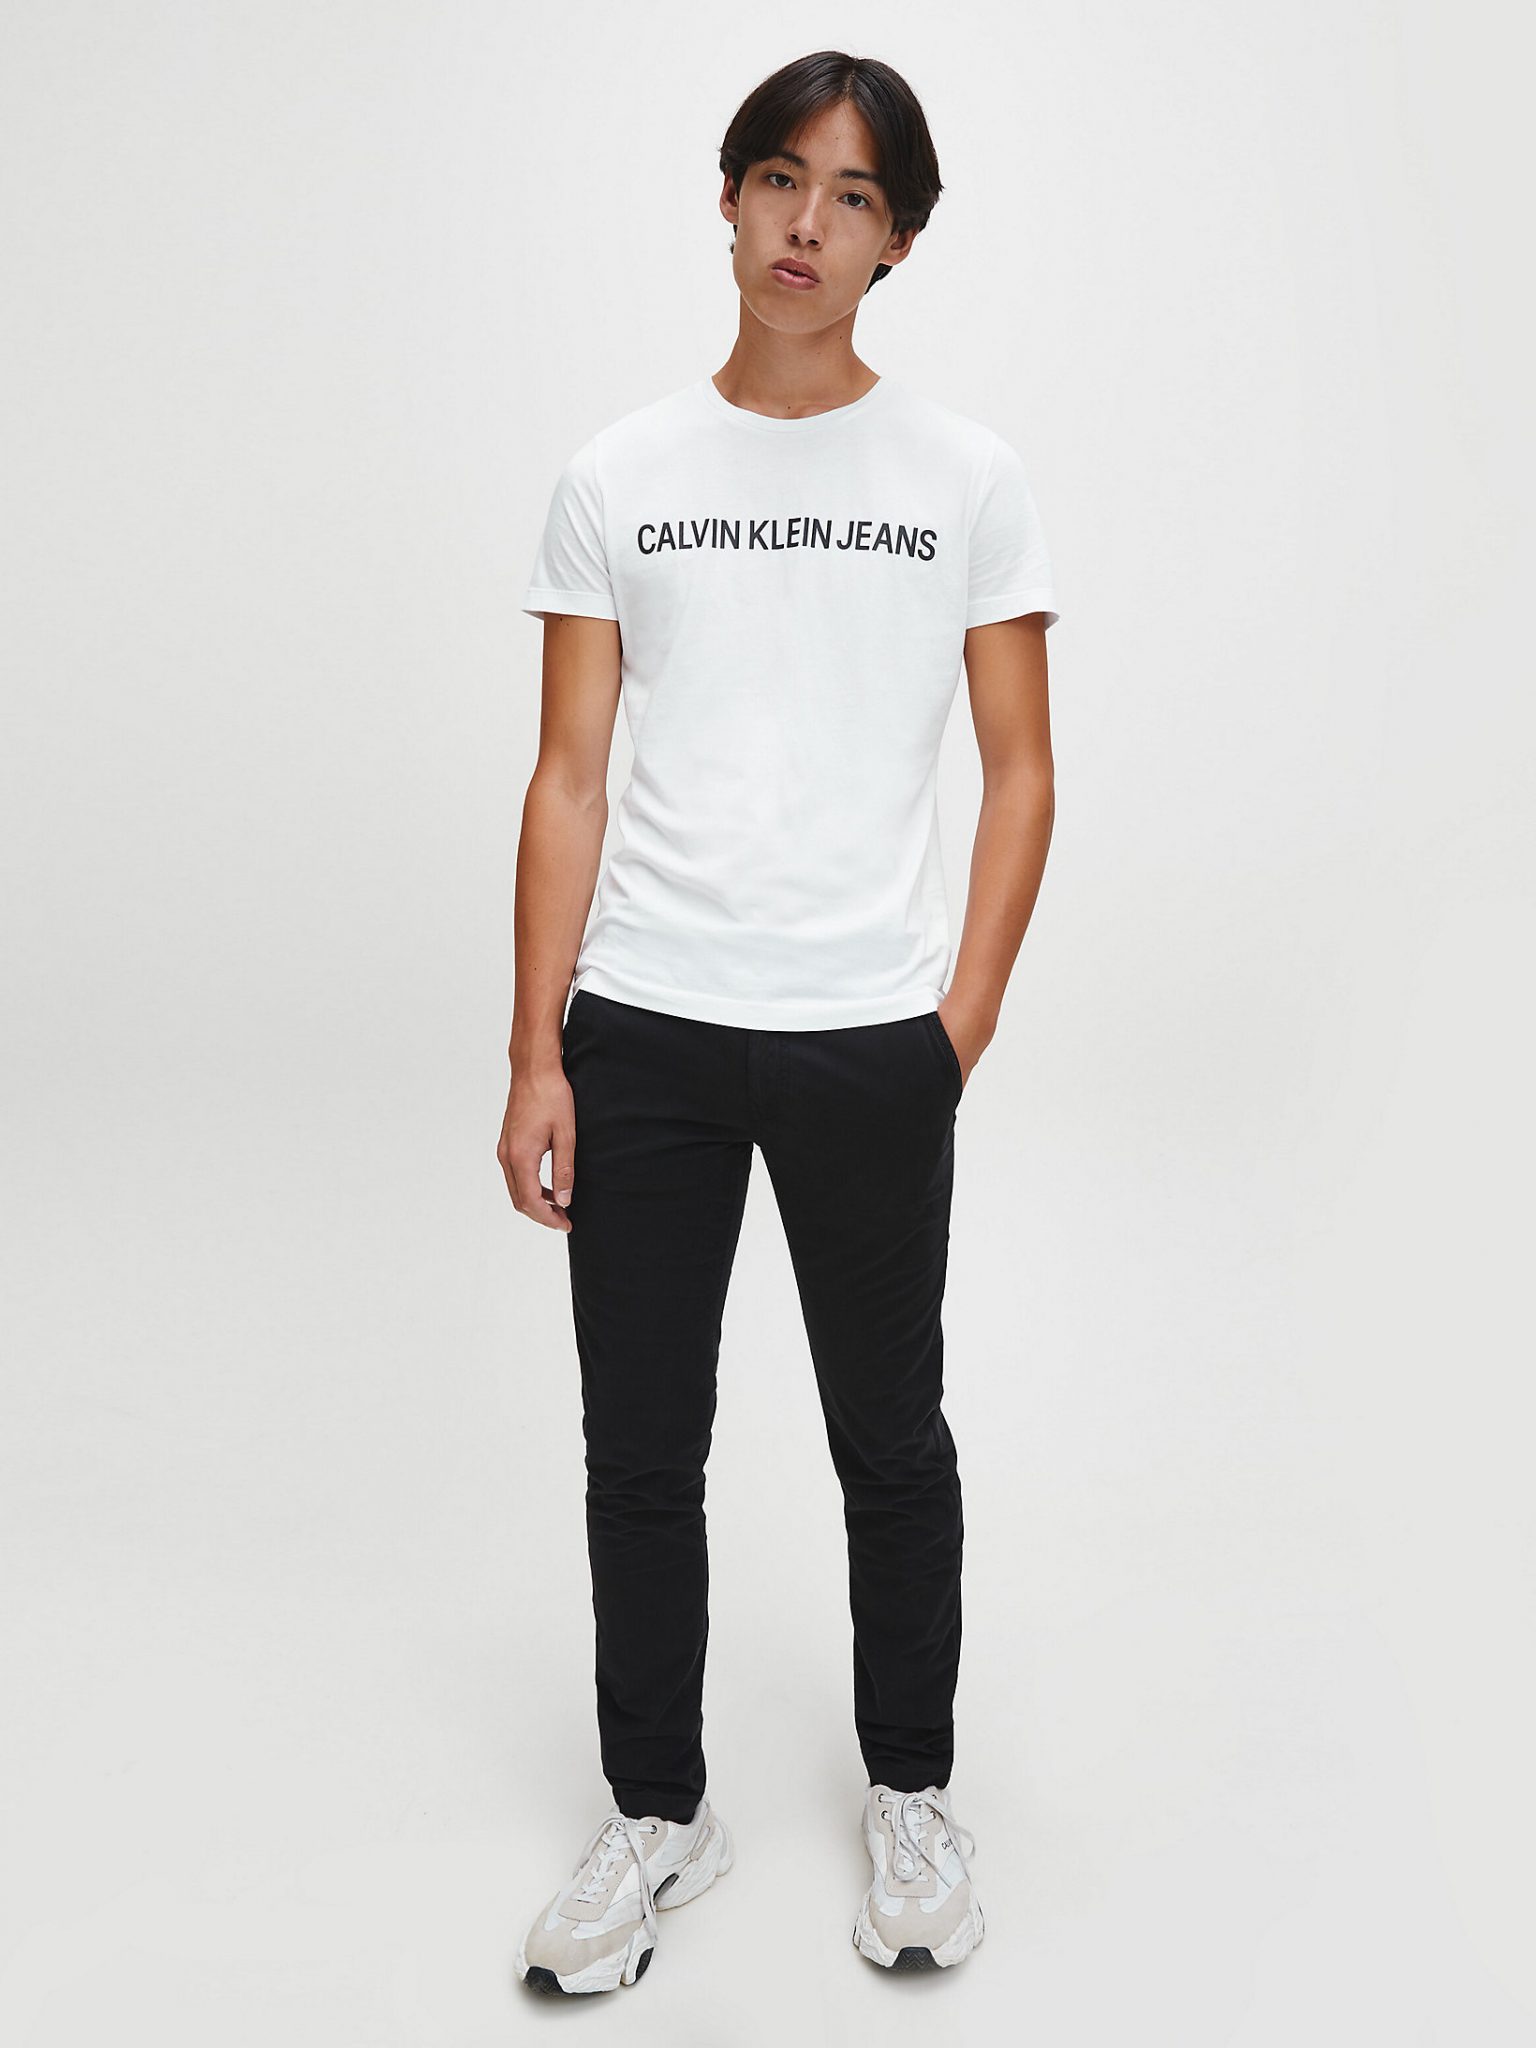 Buy Calvin Klein T-shirt Store Scandinavian Bright Institutional - logo White Fashion